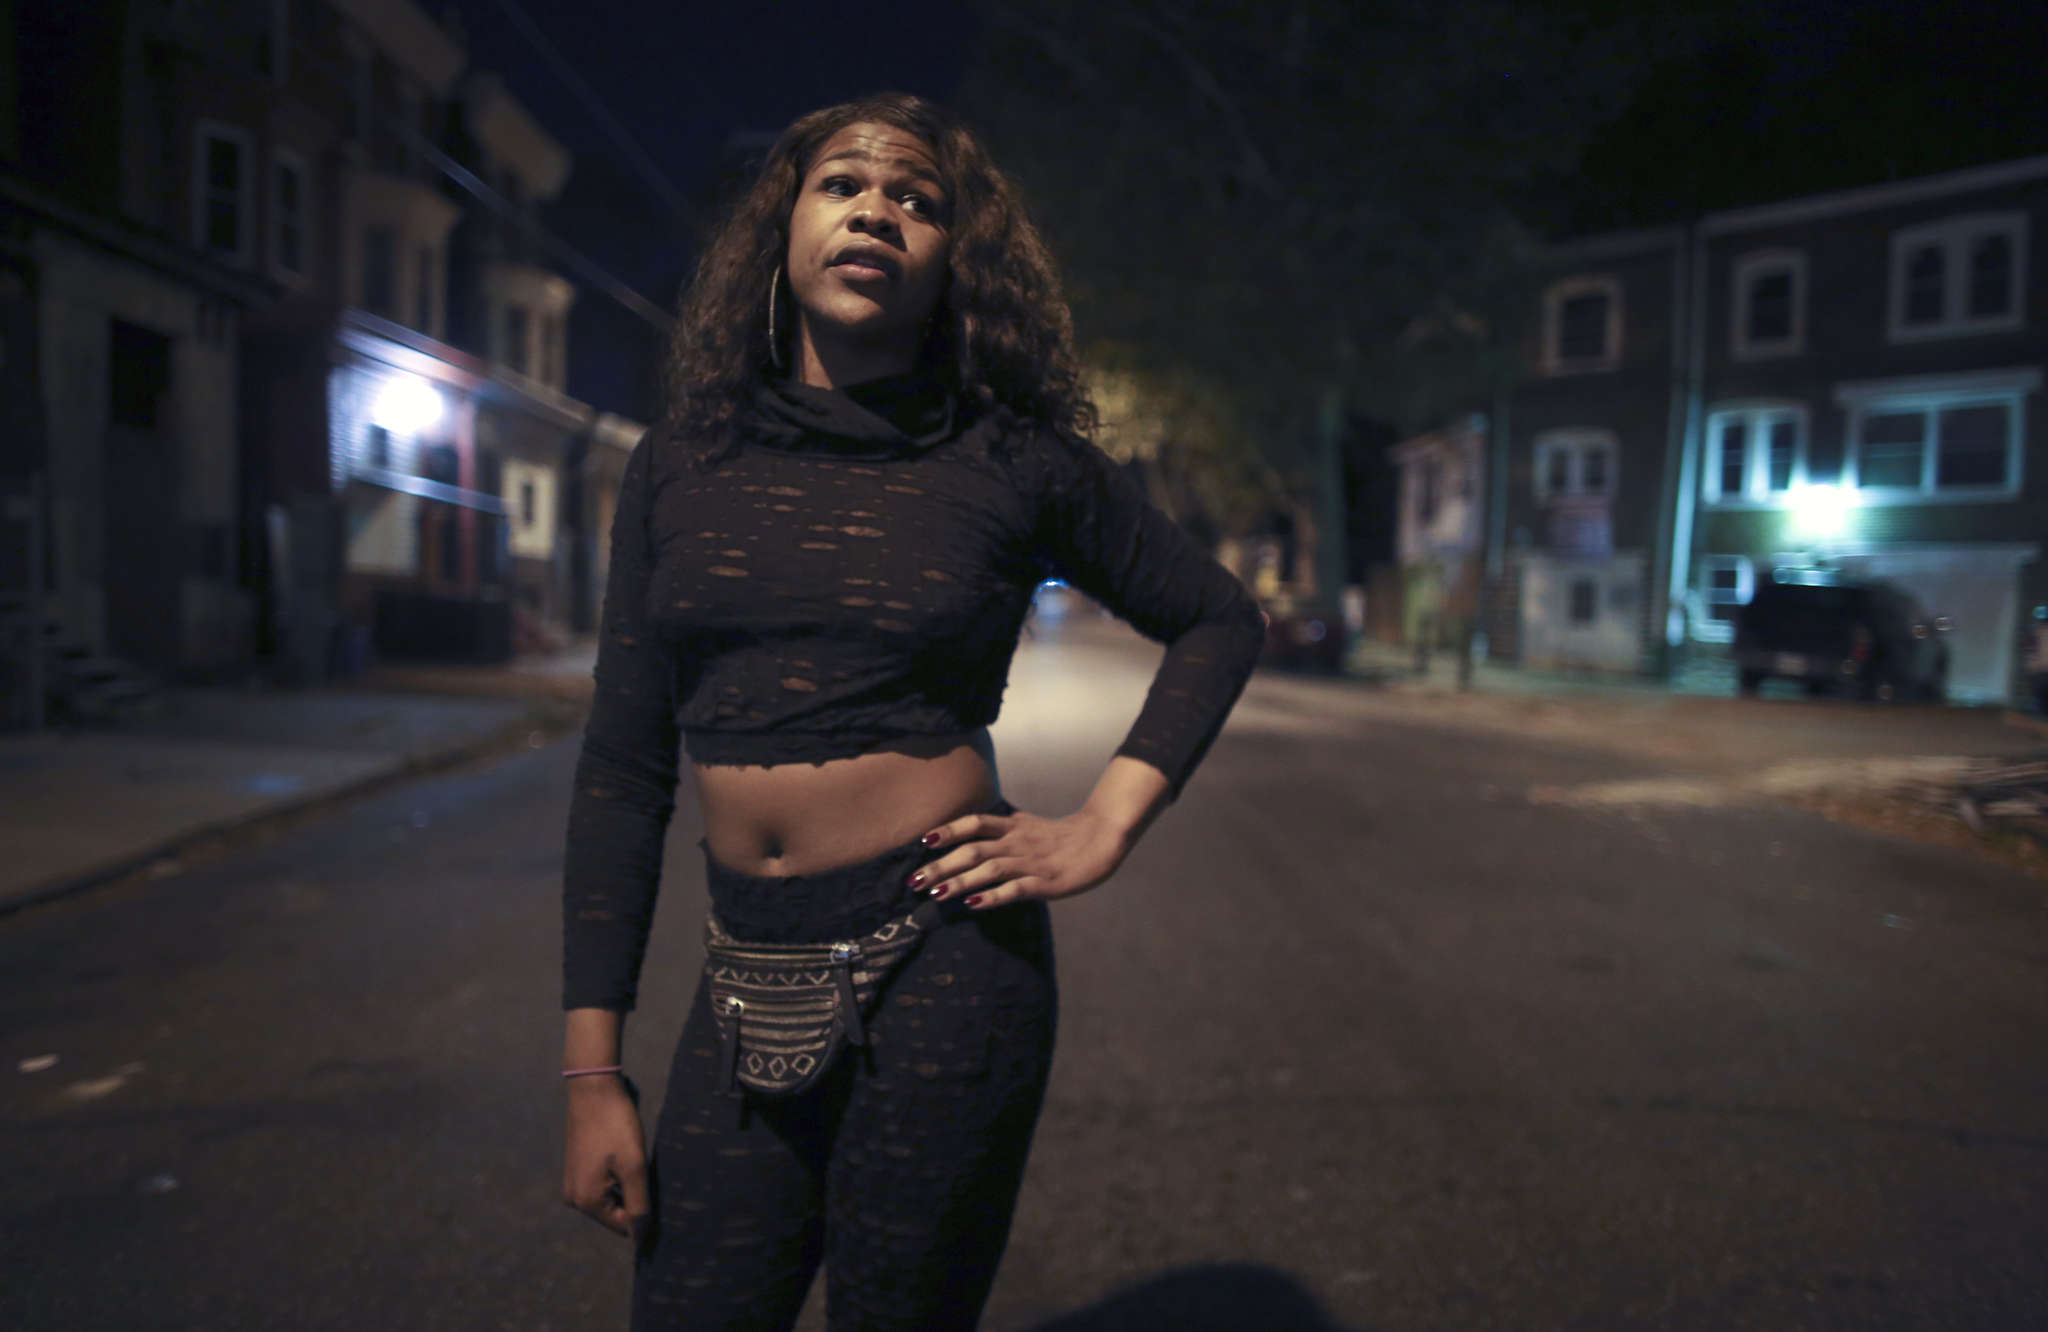 Black Transsexual Prostitutes - Transgender Prostitutes Street | Anal Dream House